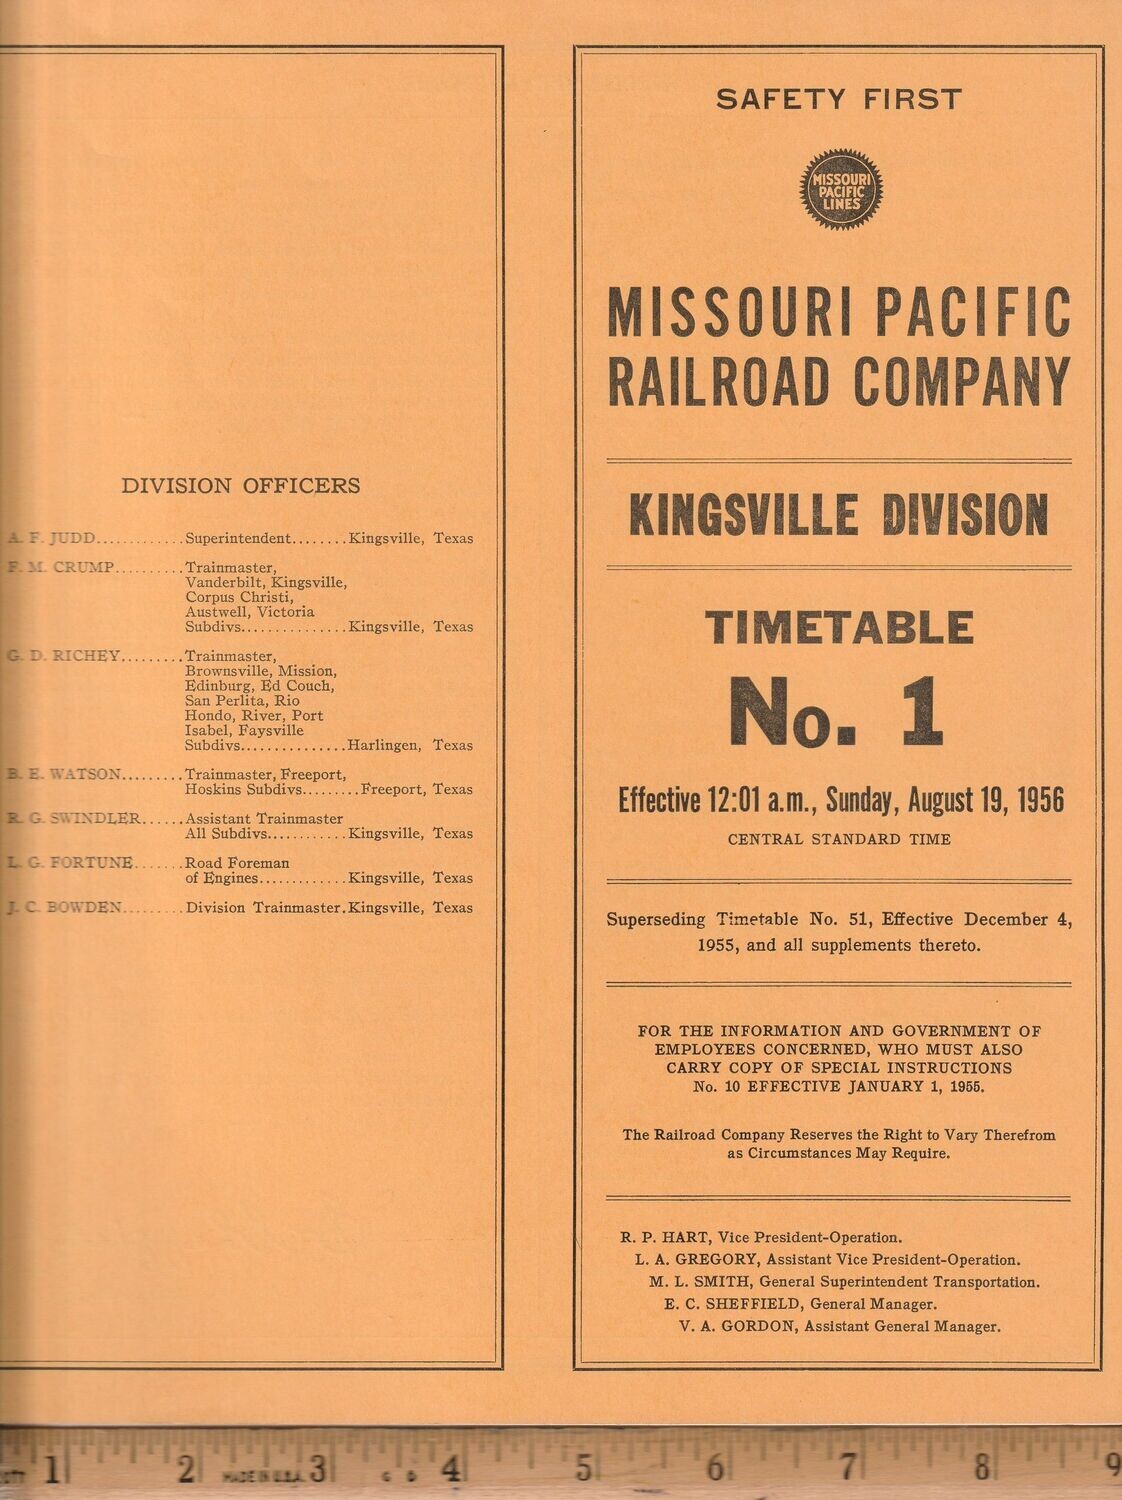 Missouri Pacific Kingsville Division 1956